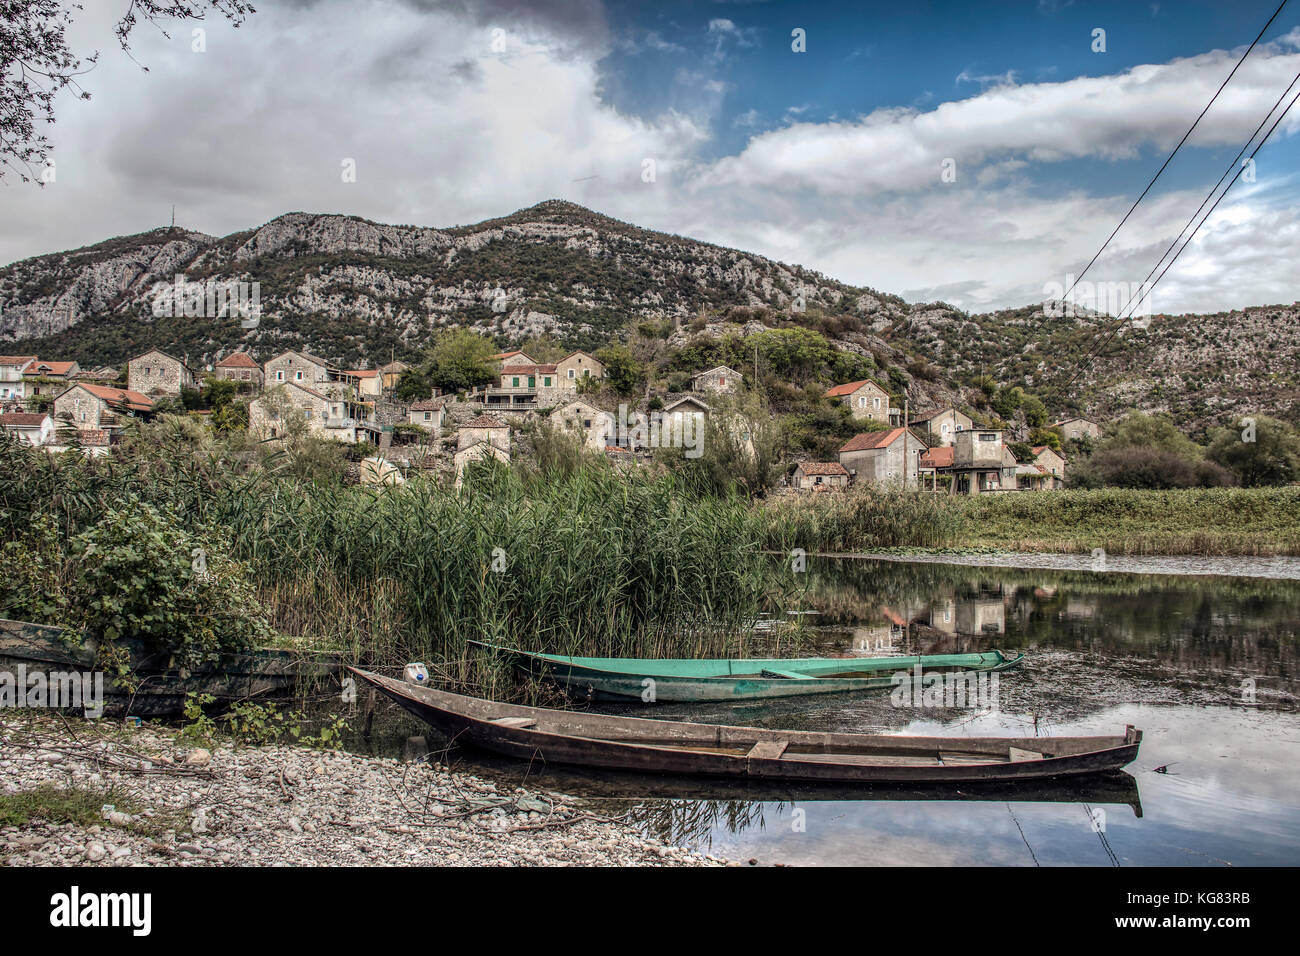 Village Dodosi, Montenegro - Traditional dories of the Skadar Lake Stock Photo